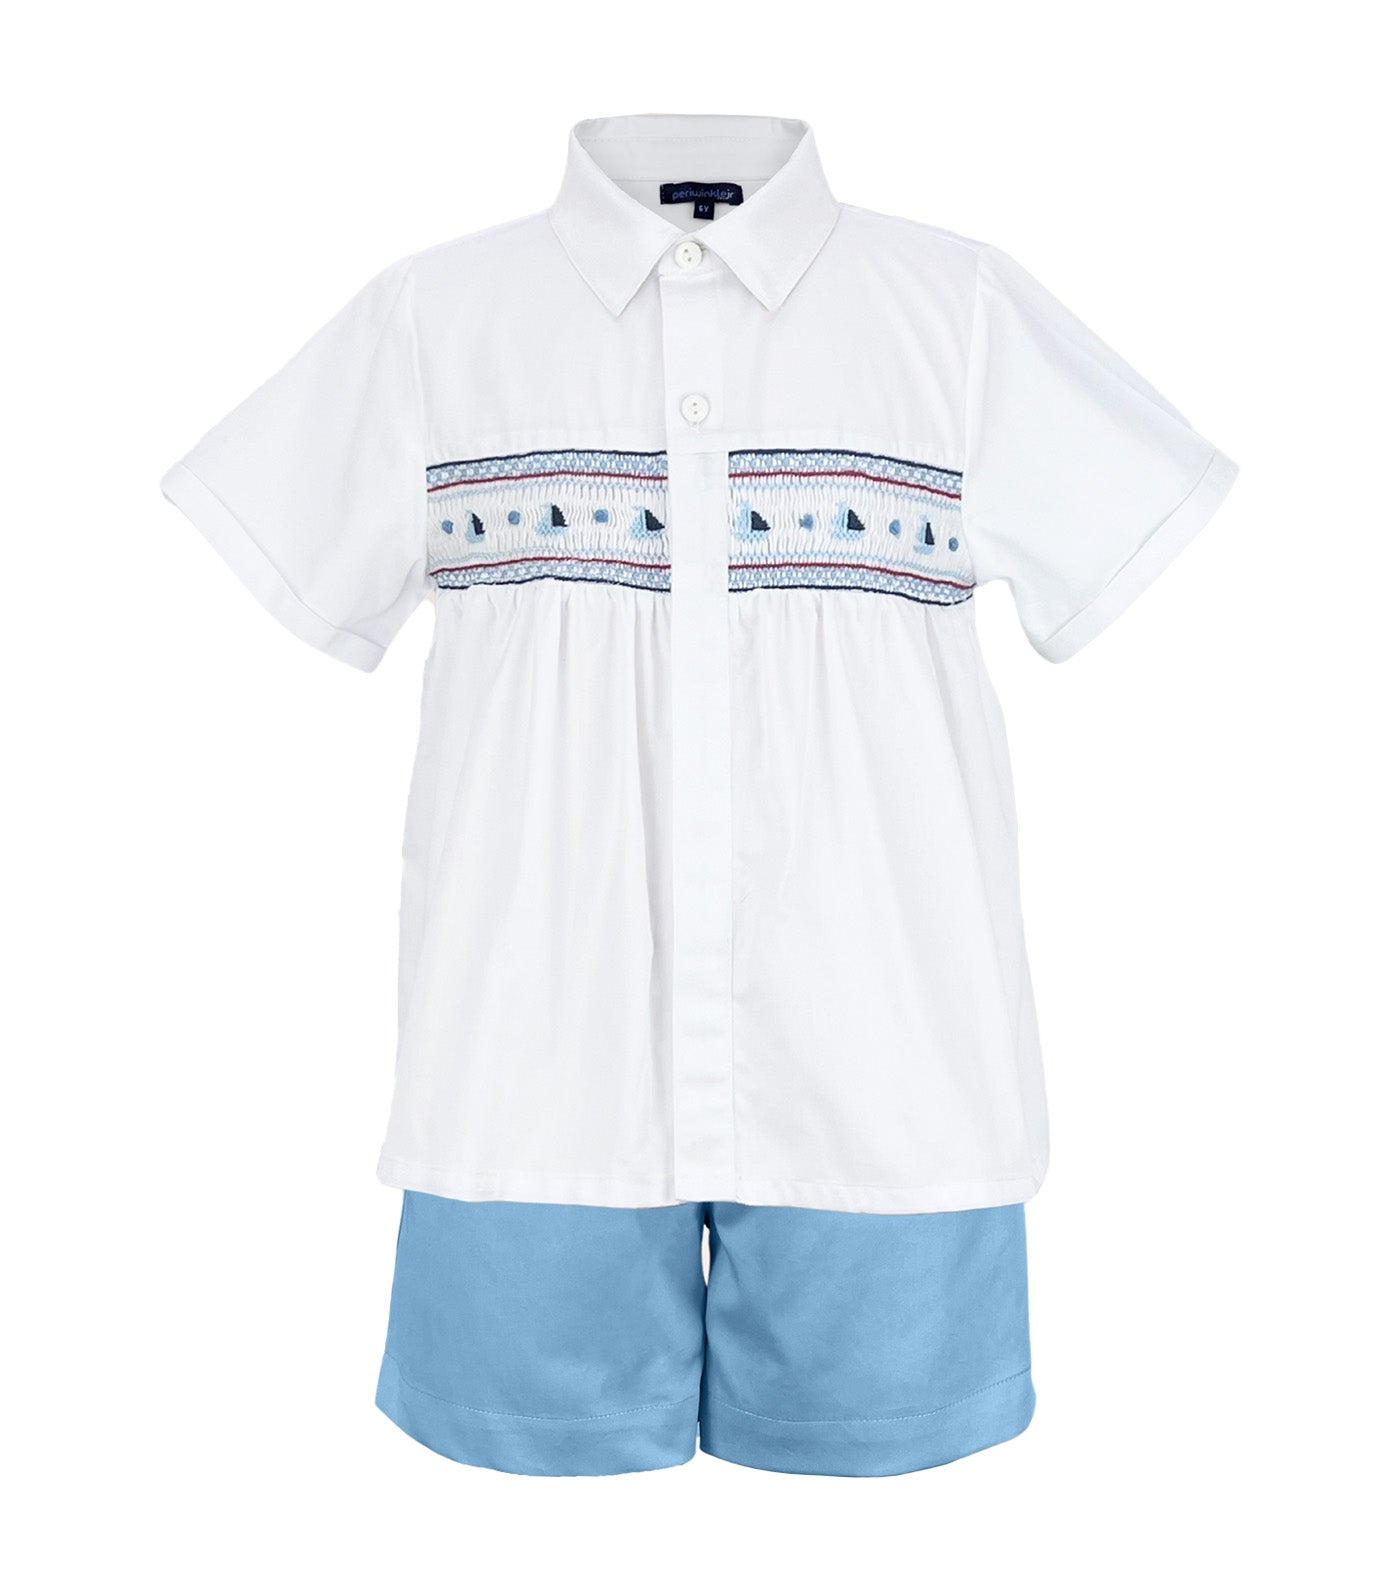 Lyam Boys Collared Shirt with Smock Detail Shorts Set Light Blue